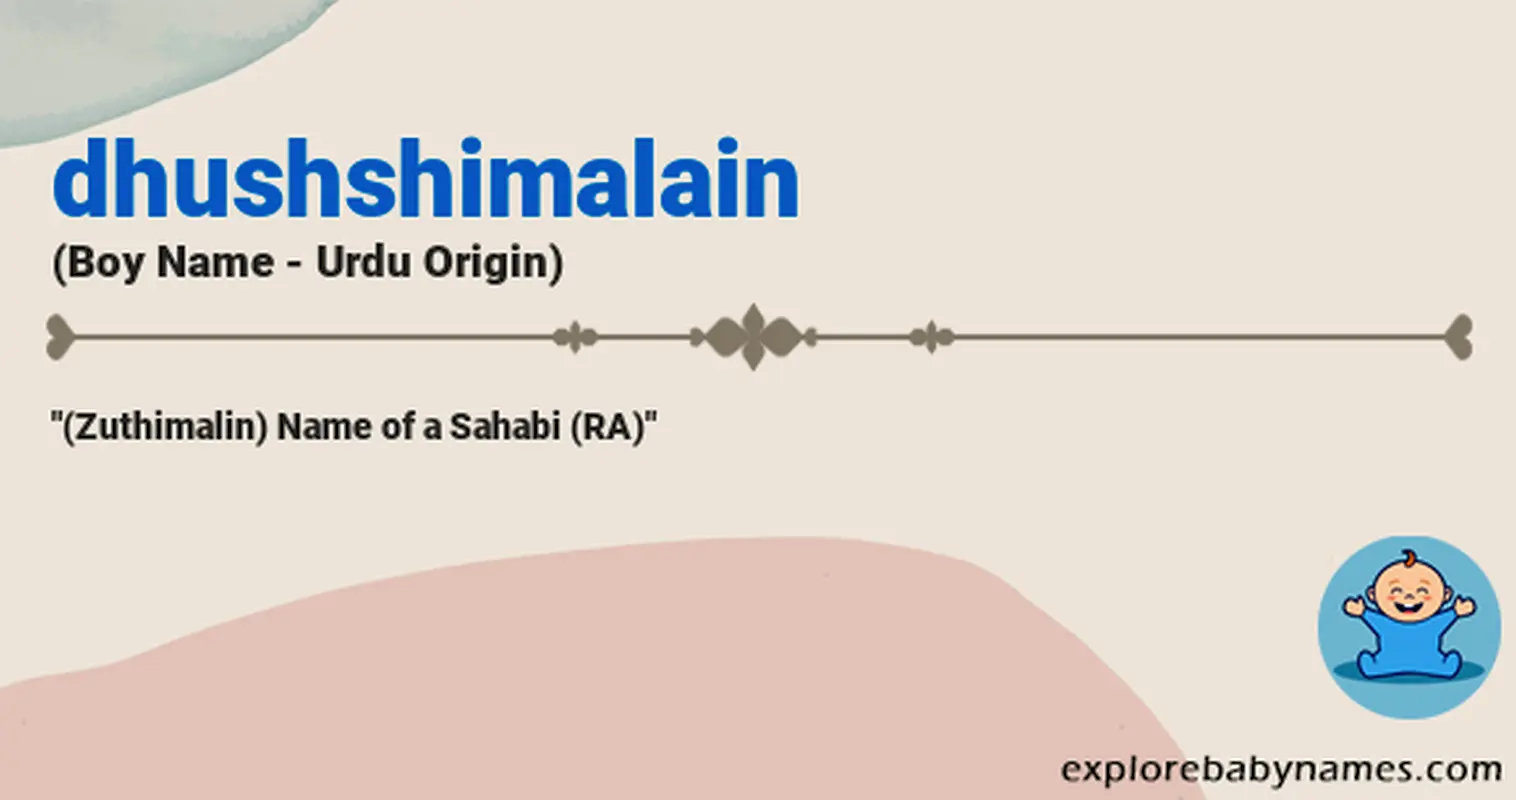 Meaning of Dhushshimalain